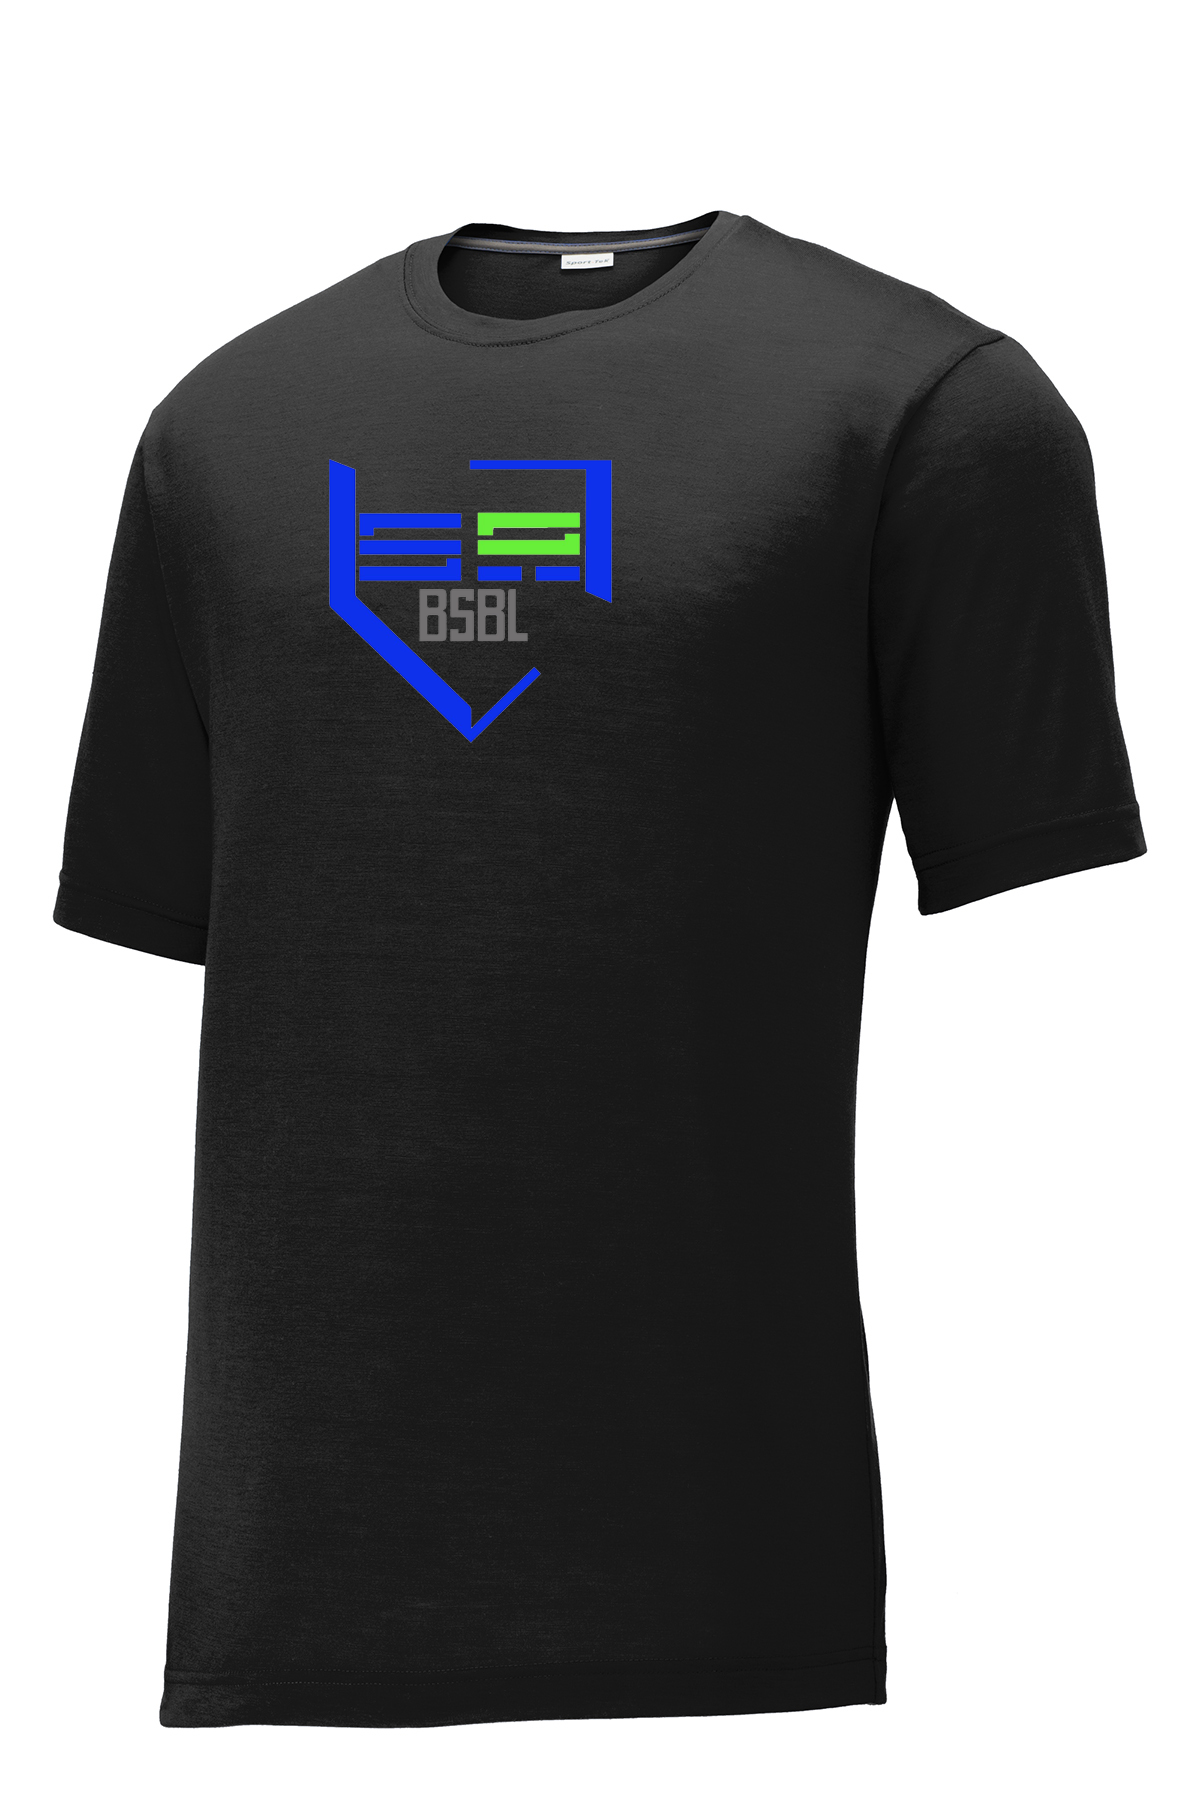 Synergy Athletics Baseball CottonTouch Performance T-Shirt